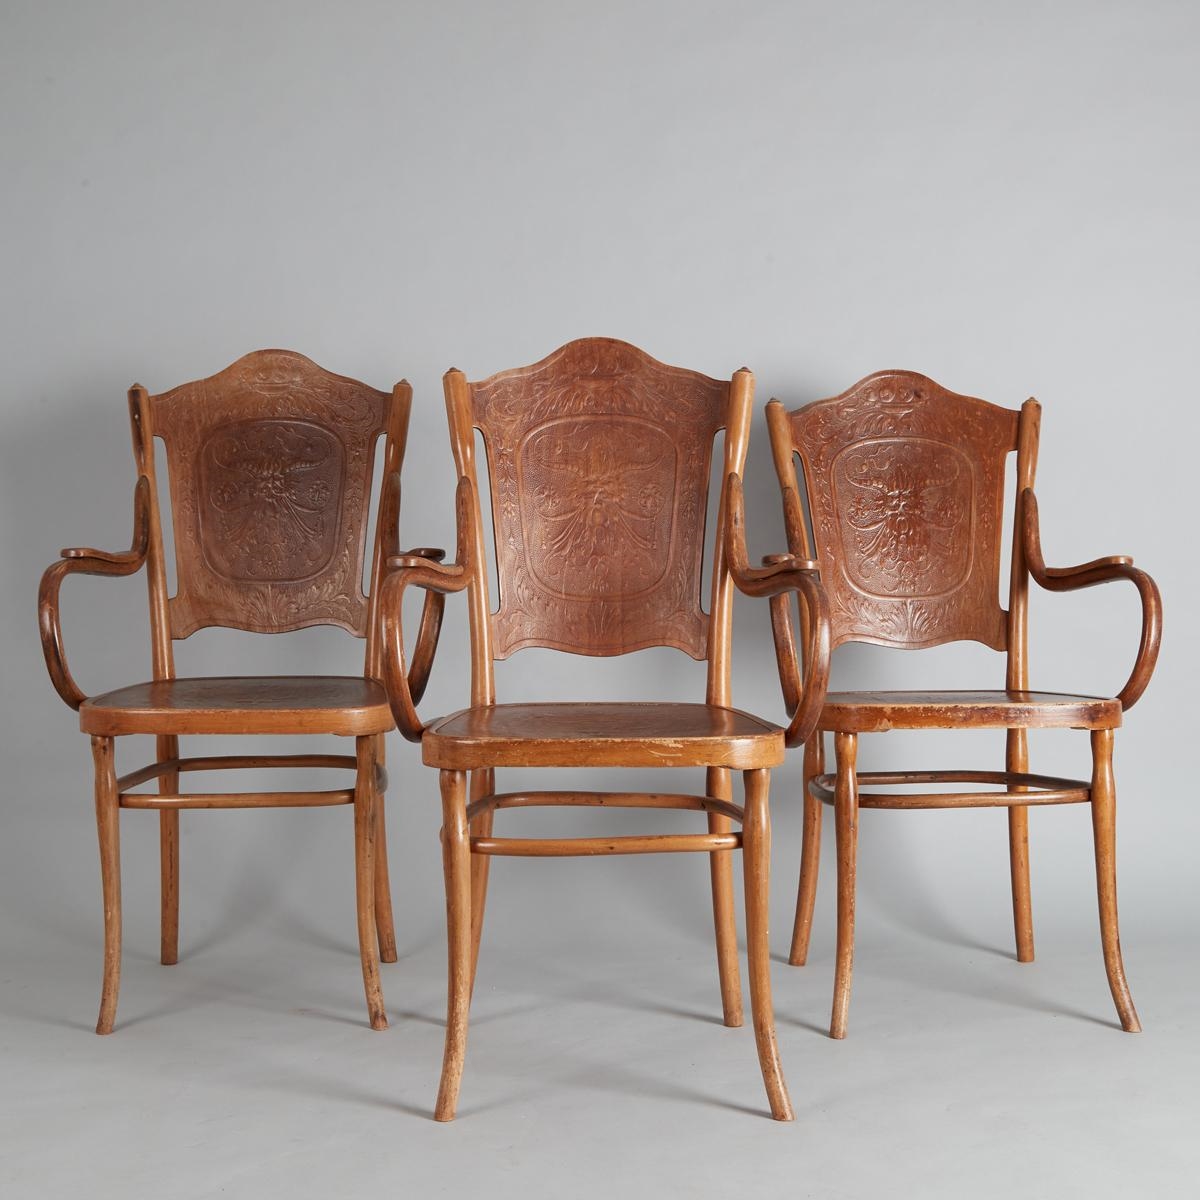 A Set of Three Vienna Secession Bentwood Chairs by J & J Kohn by Jacob & Josef Kohn, 1900s